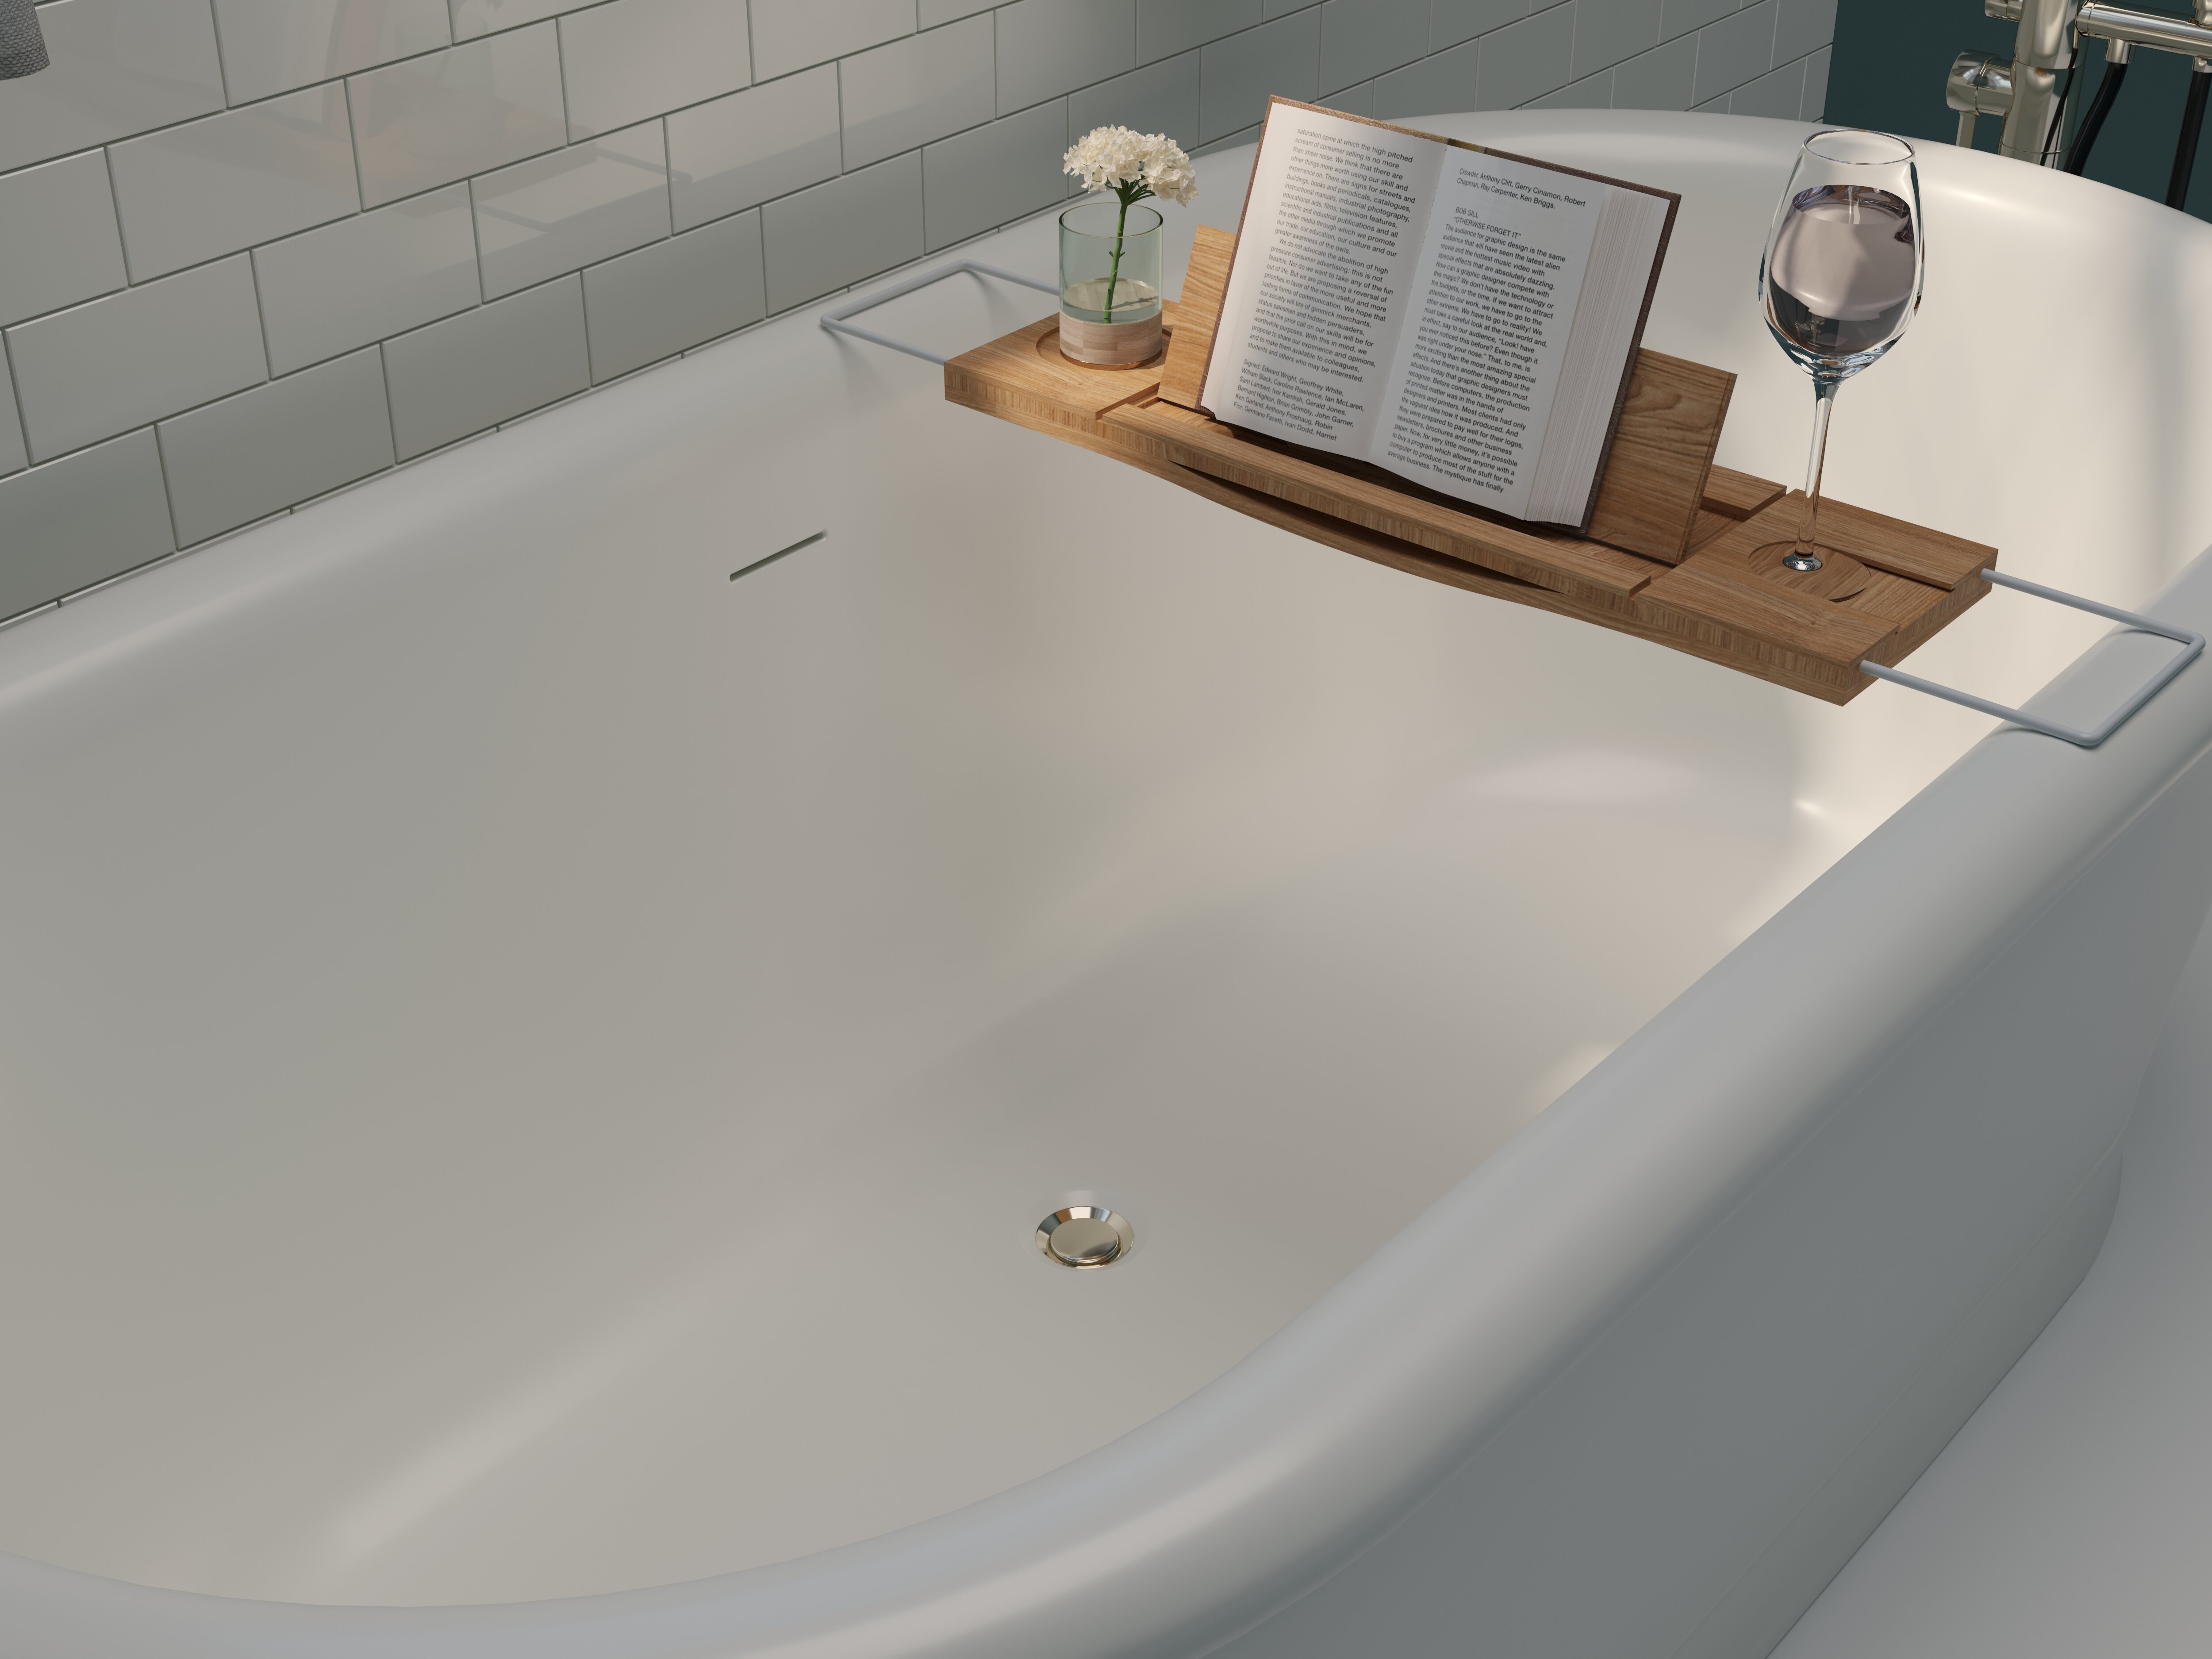 Rebrilliant Tulare Freestanding Bath Caddy & Reviews